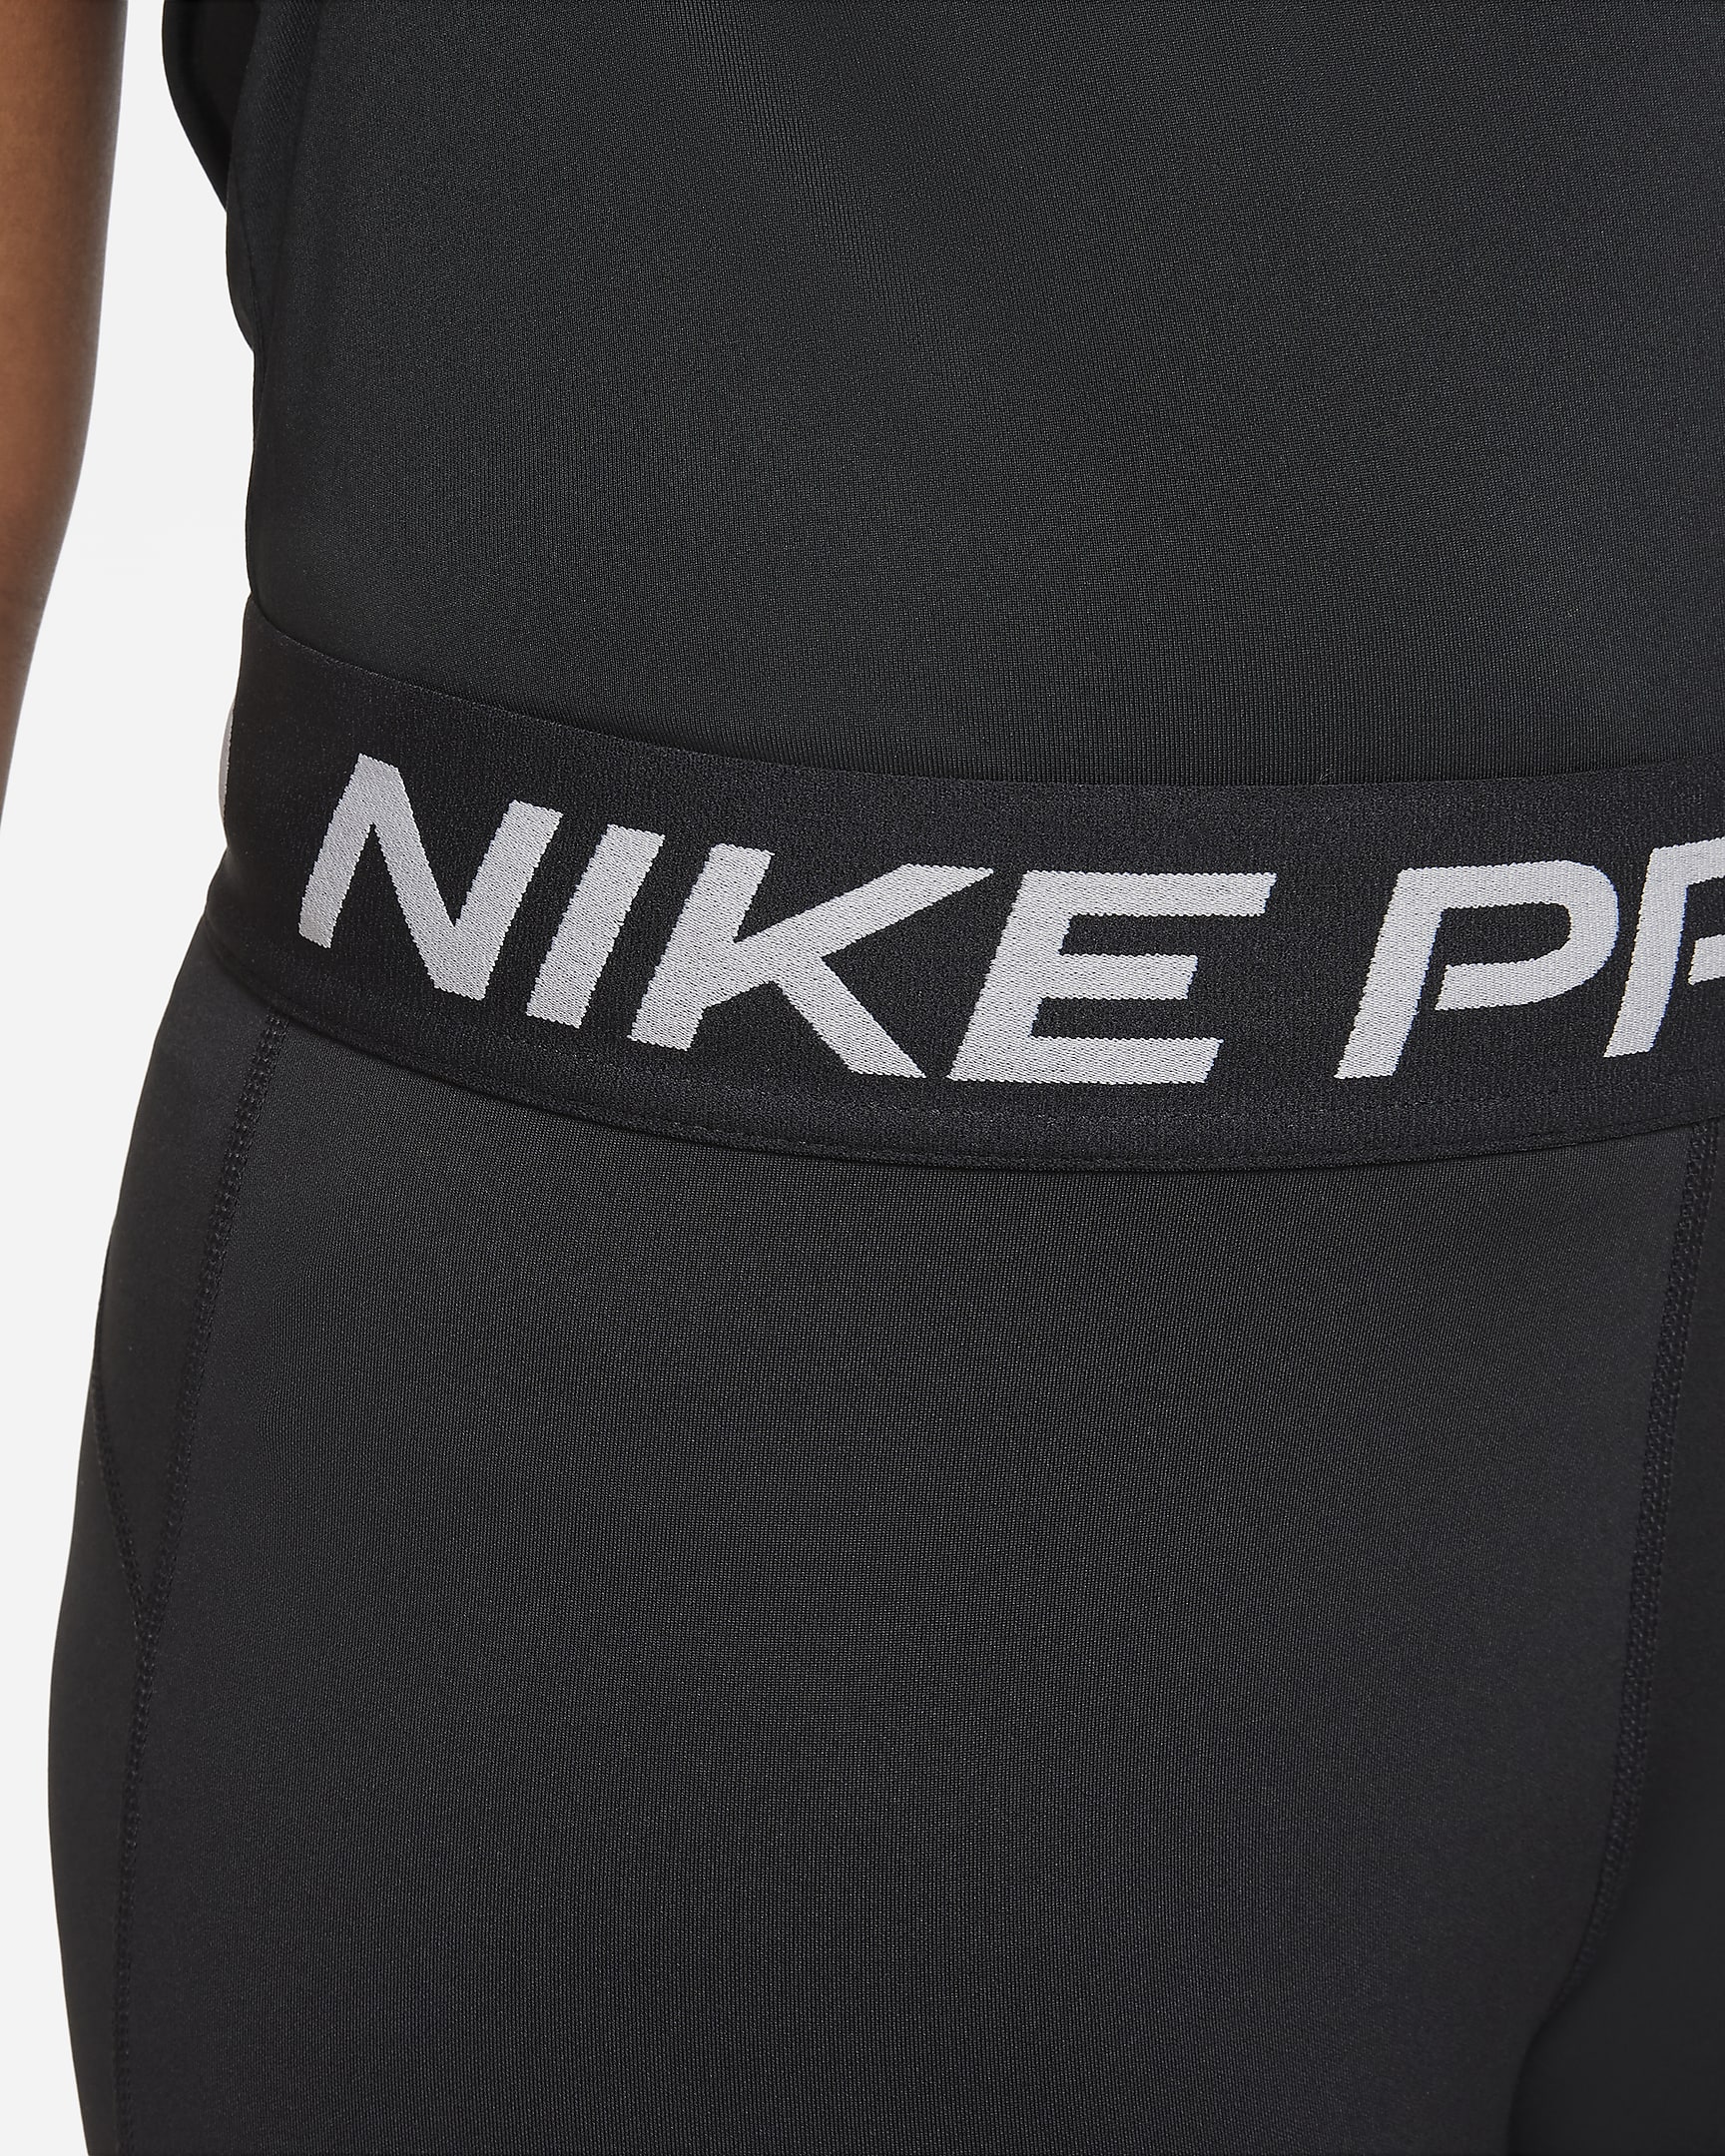 Nike Pro Dri-FIT Older Kids' (Girls') Shorts (Extended Size) - Black/White